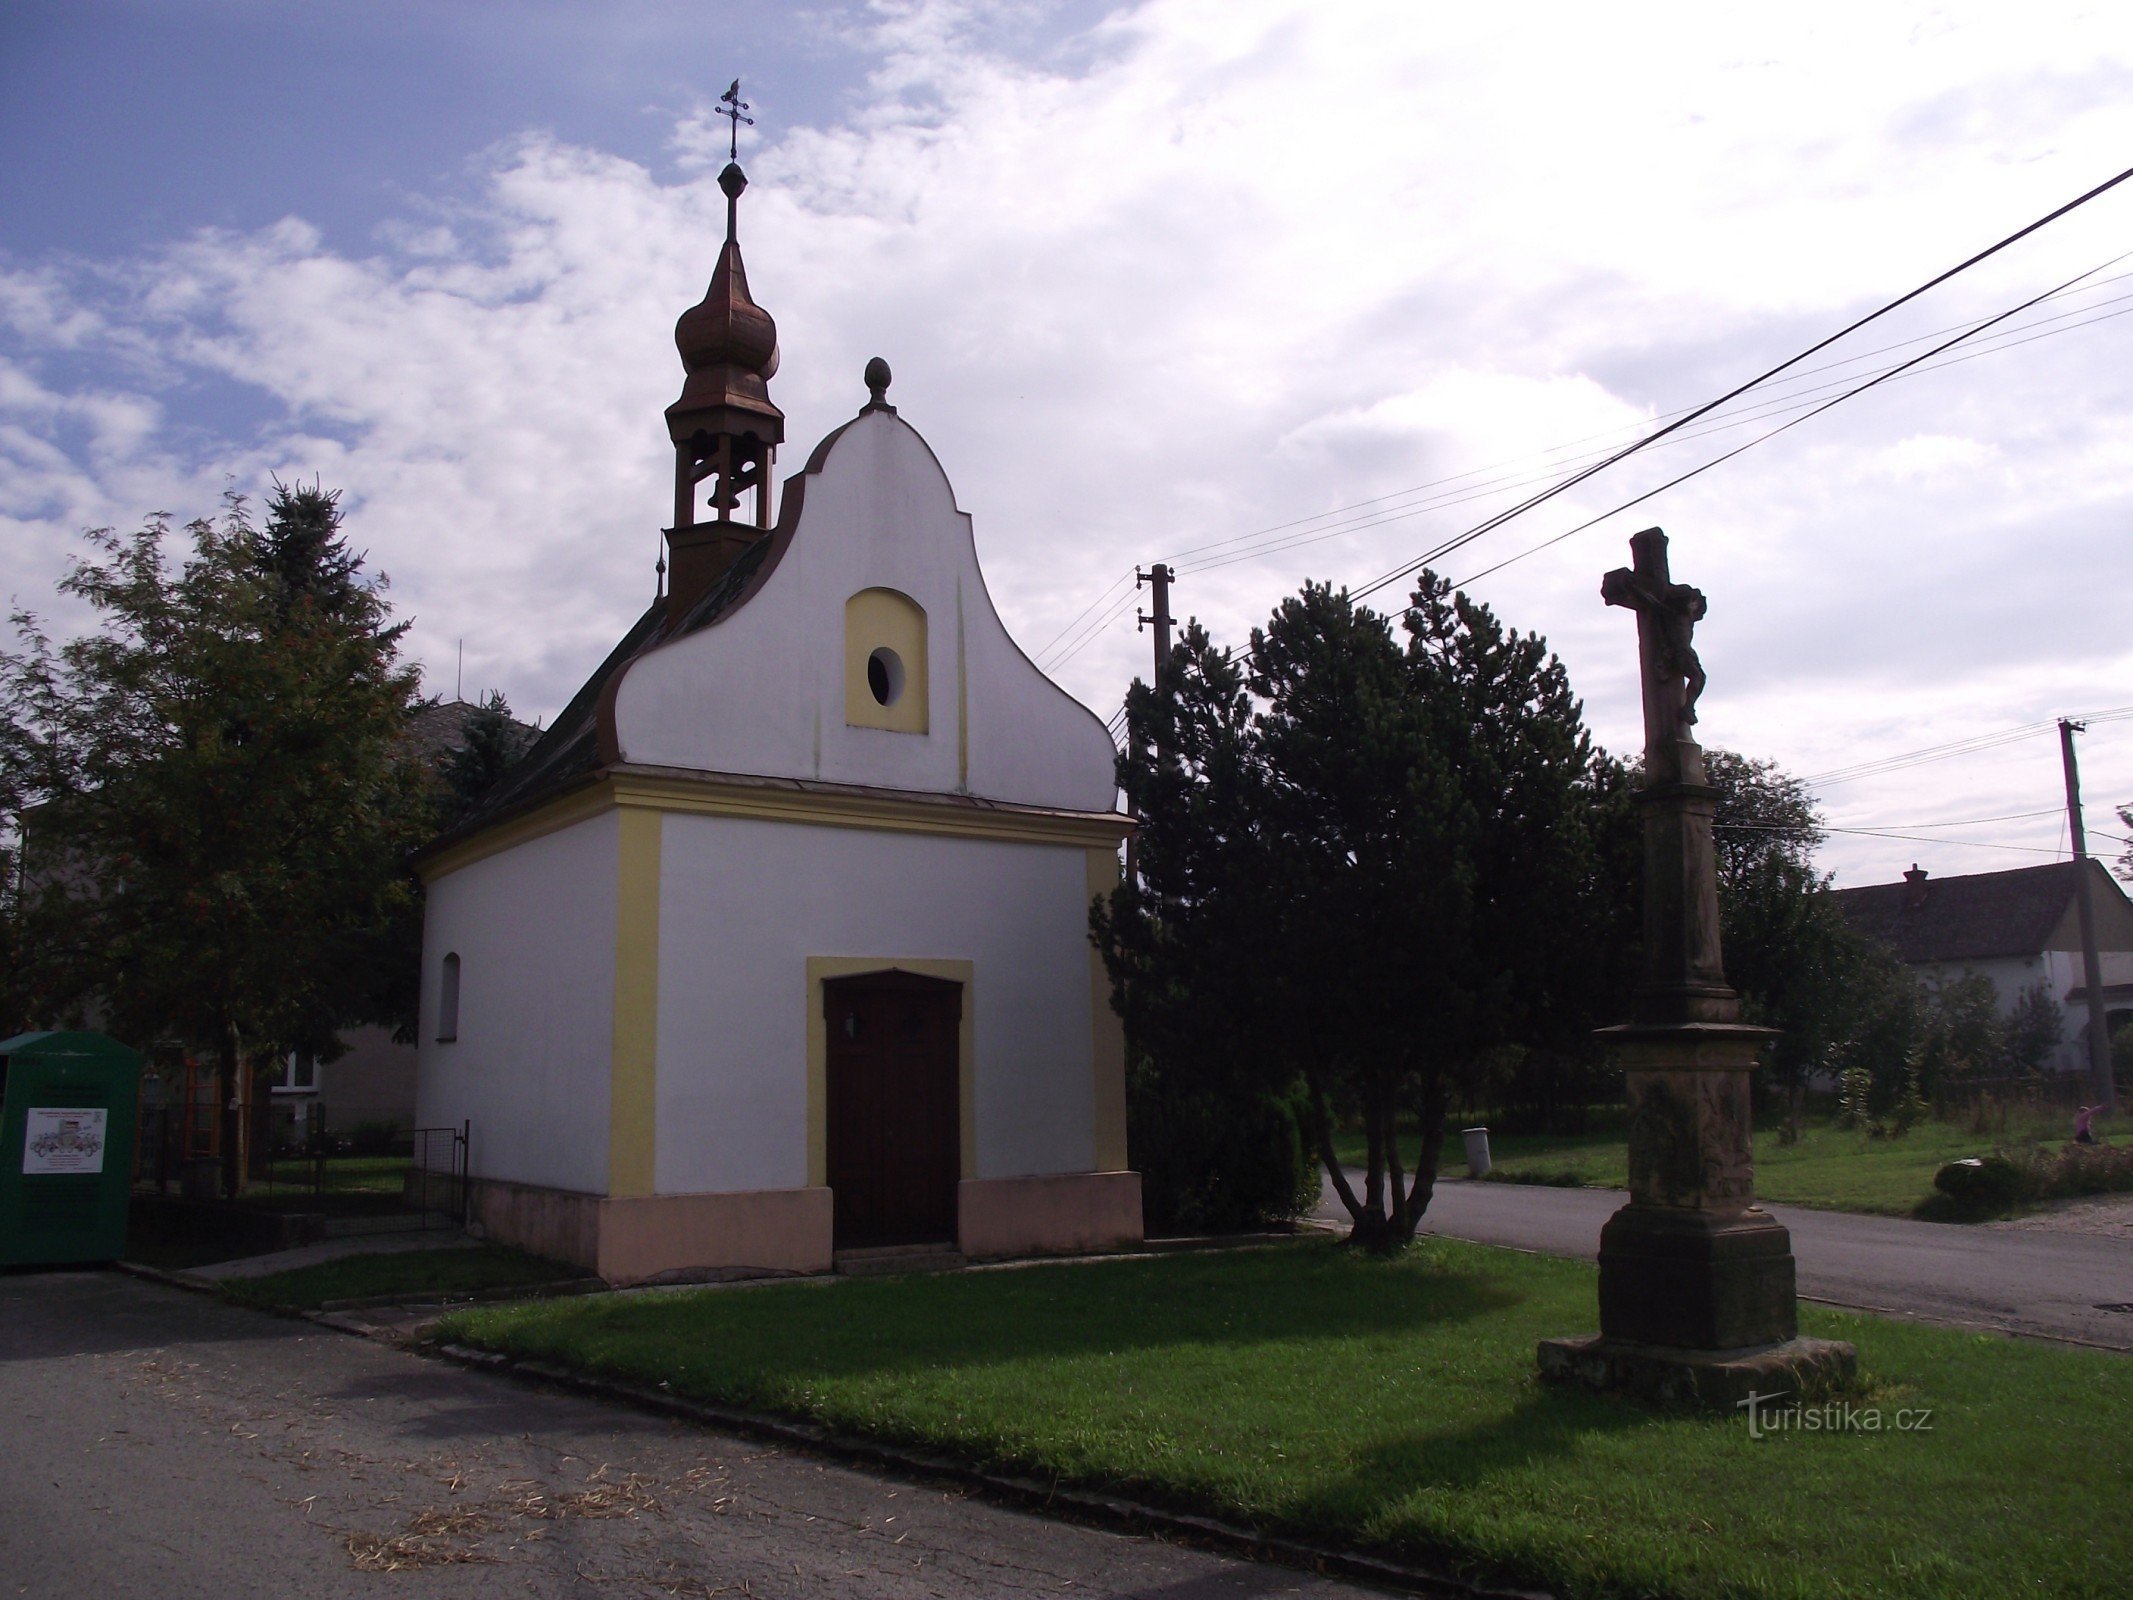 Doubravice (Moravičany) - capela da Santíssima Trindade